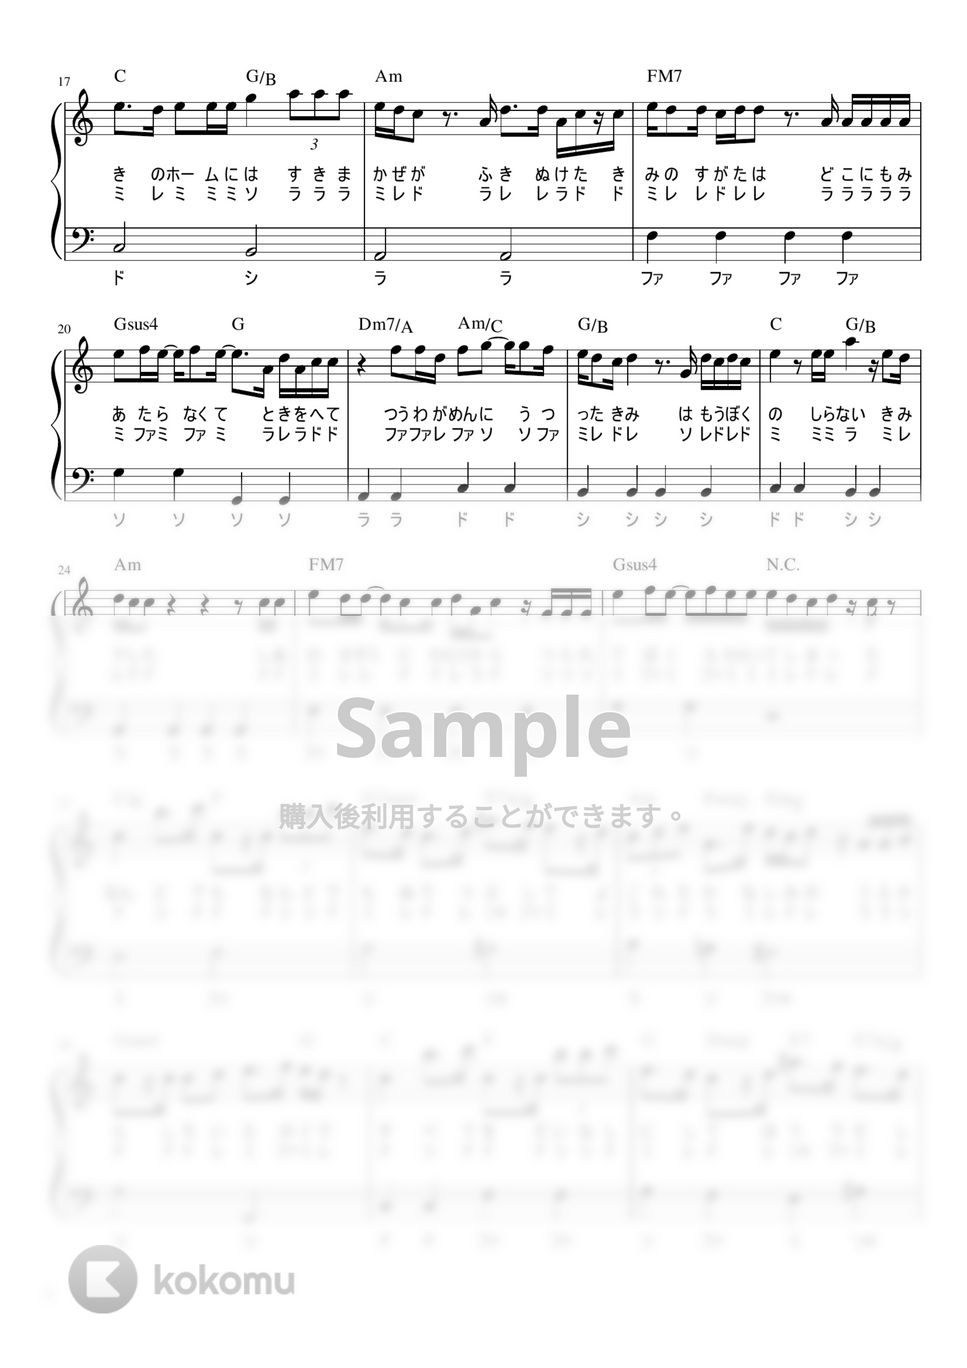 King Gnu - カメレオン (かんたん / 歌詞付き / ドレミ付き / 初心者) by piano.tokyo